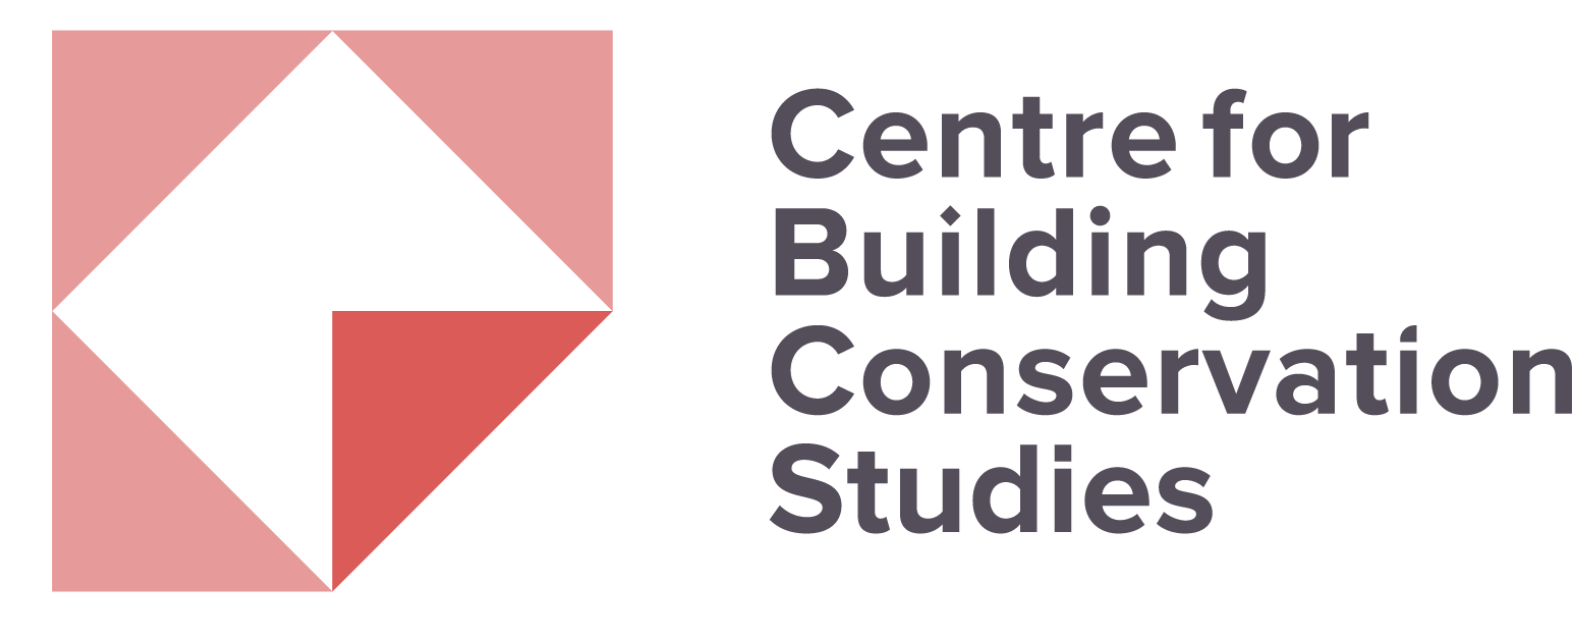 Centre for Building Conservation Studies logo